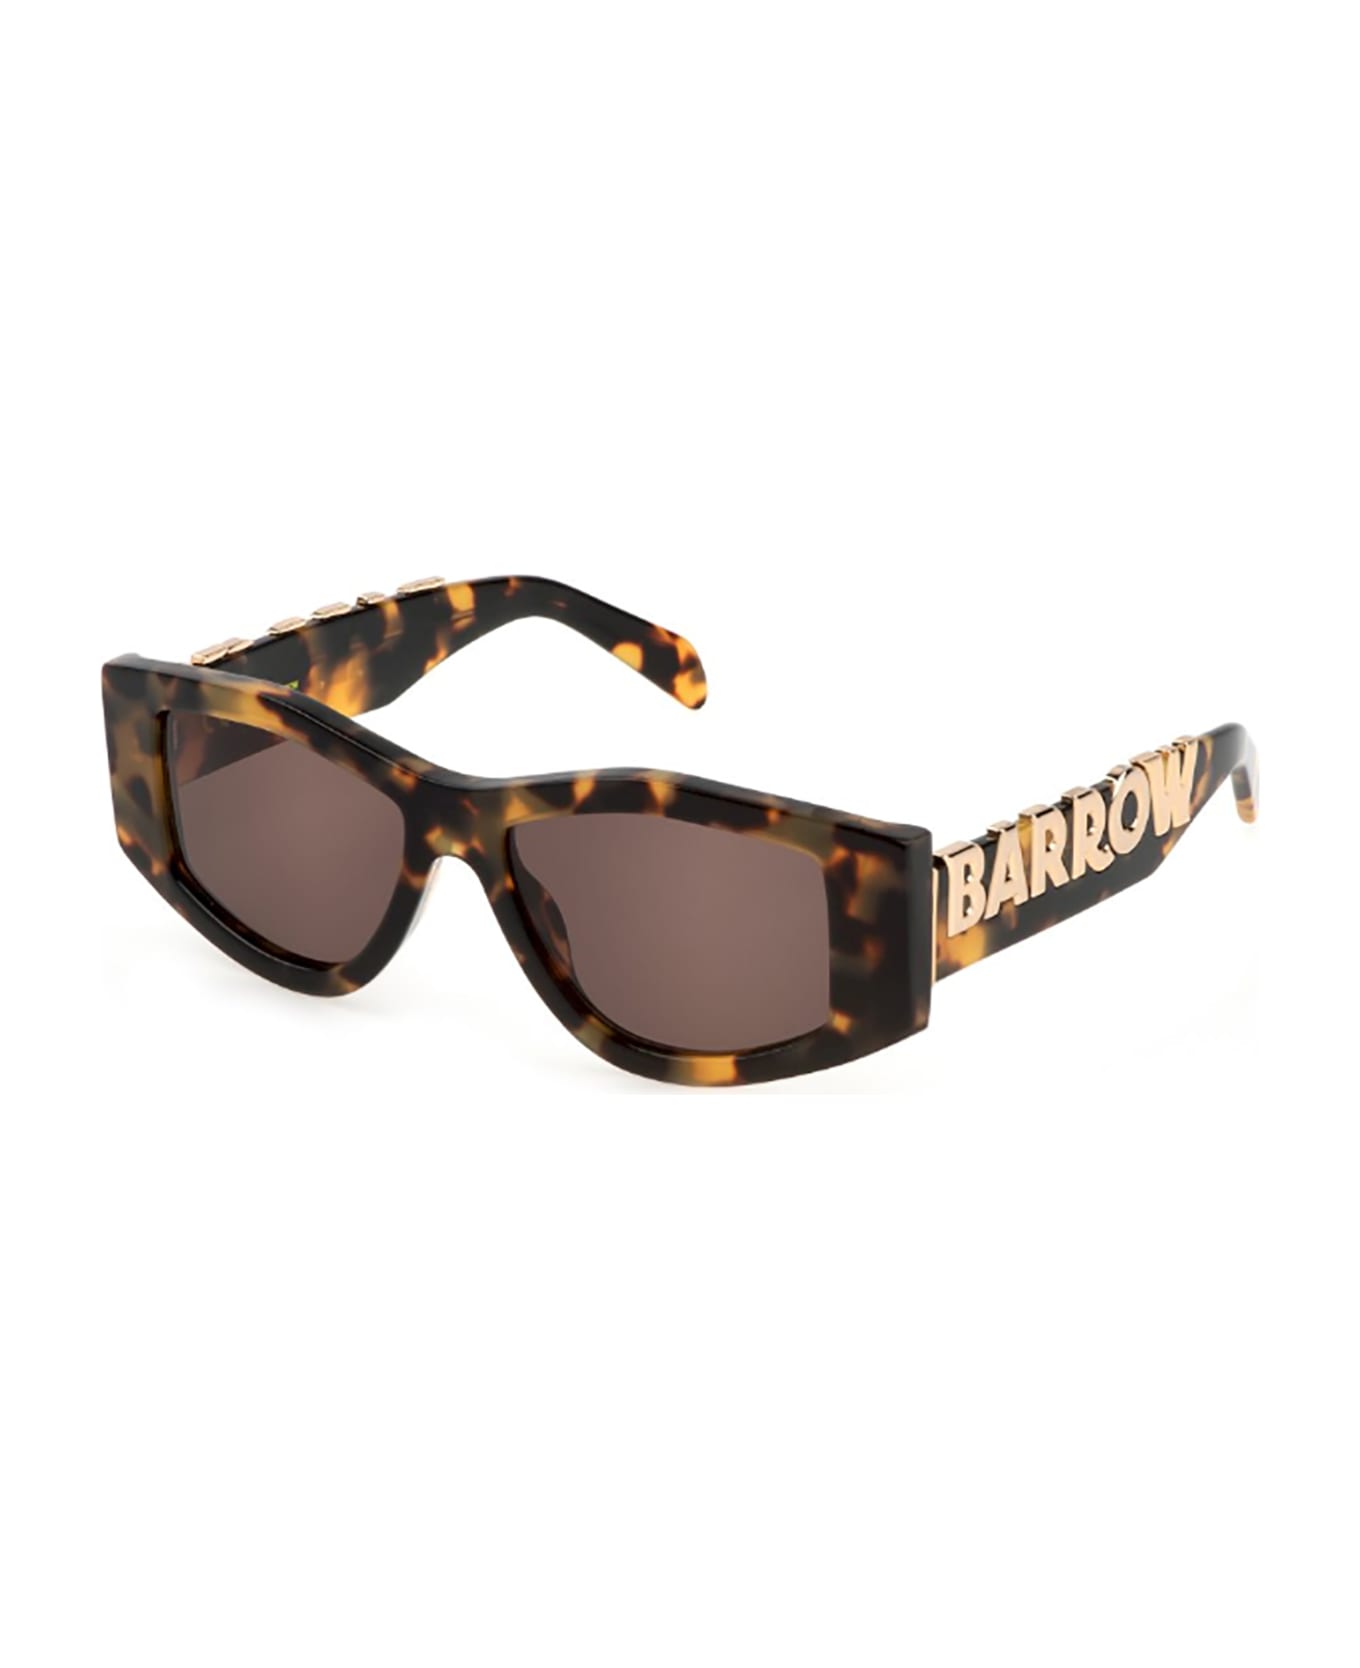 Barrow SBA004 Sunglasses